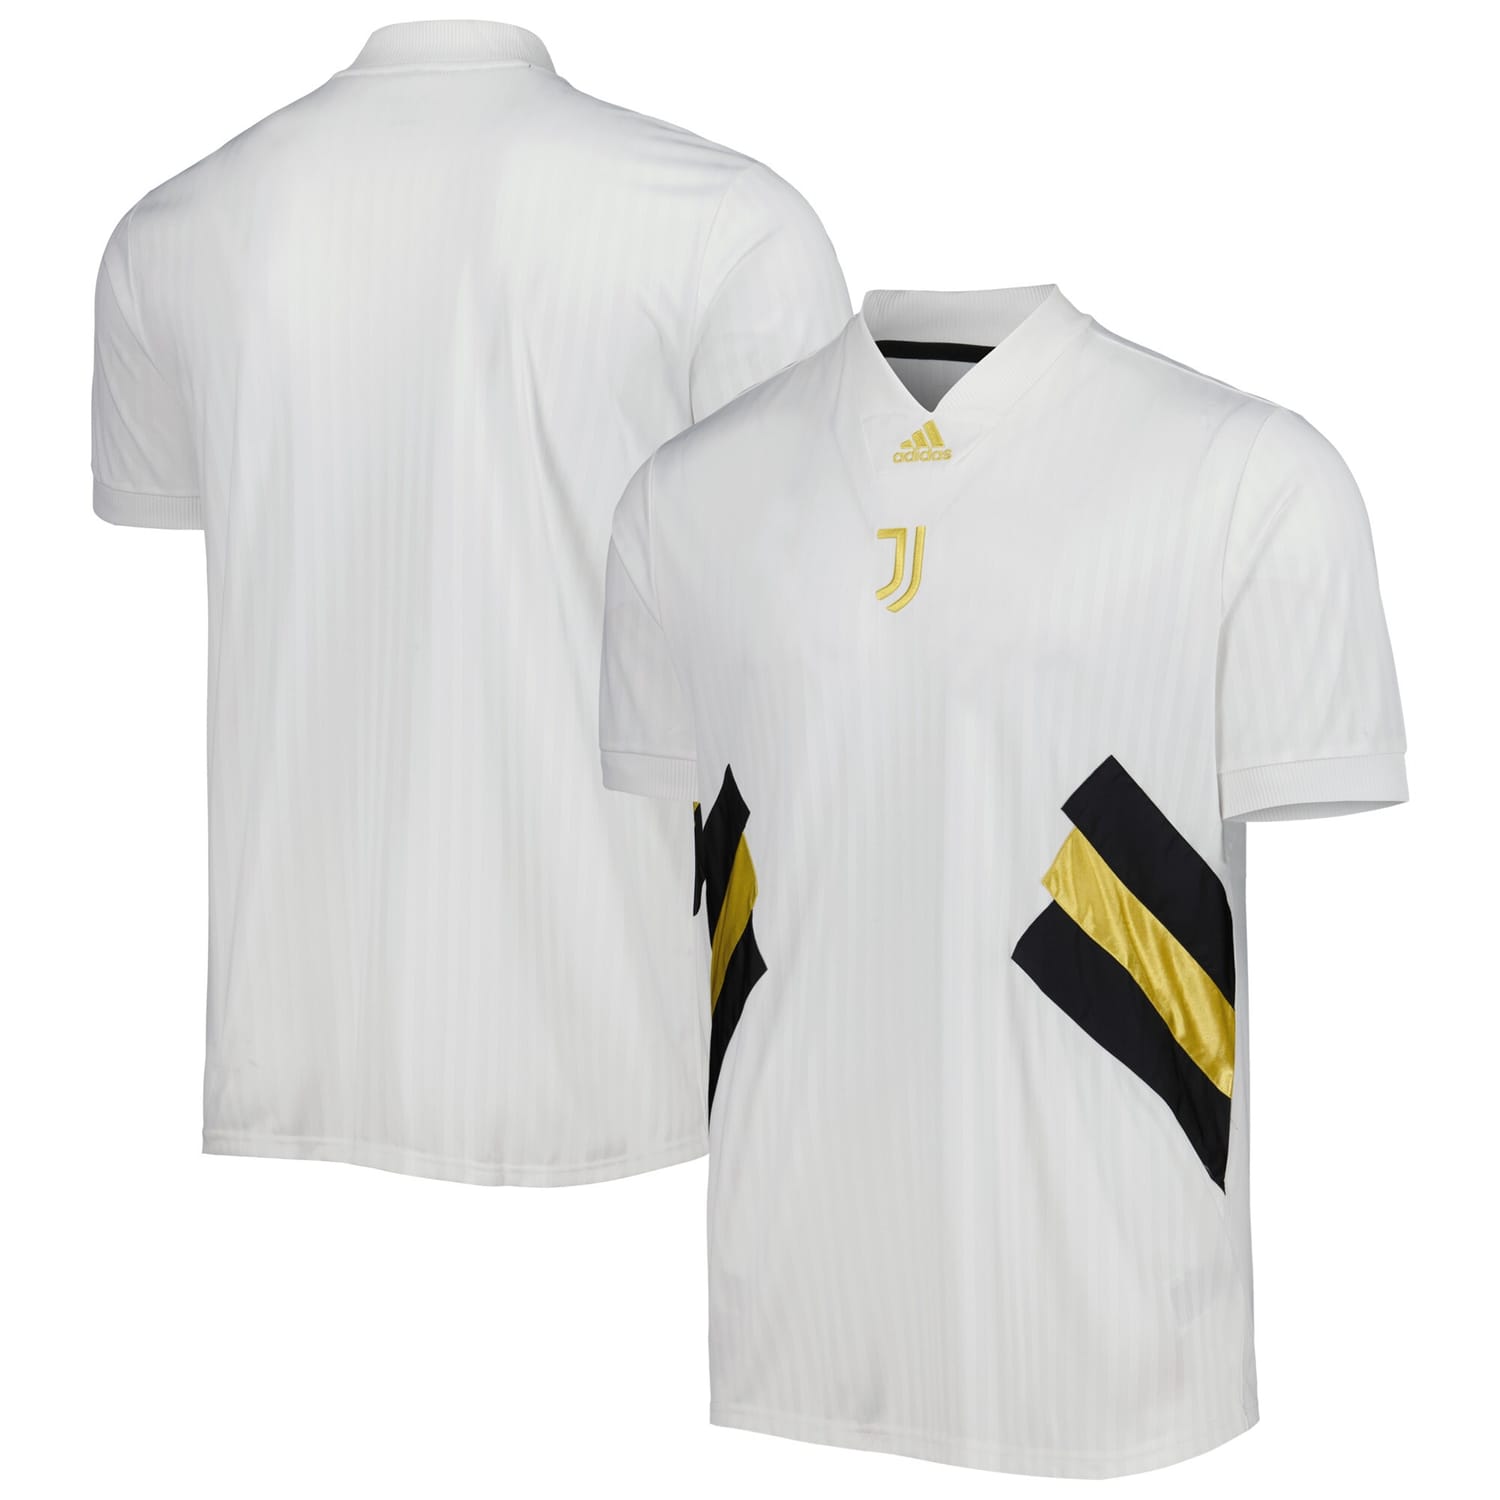 Serie A Juventus Jersey Shirt White for Men